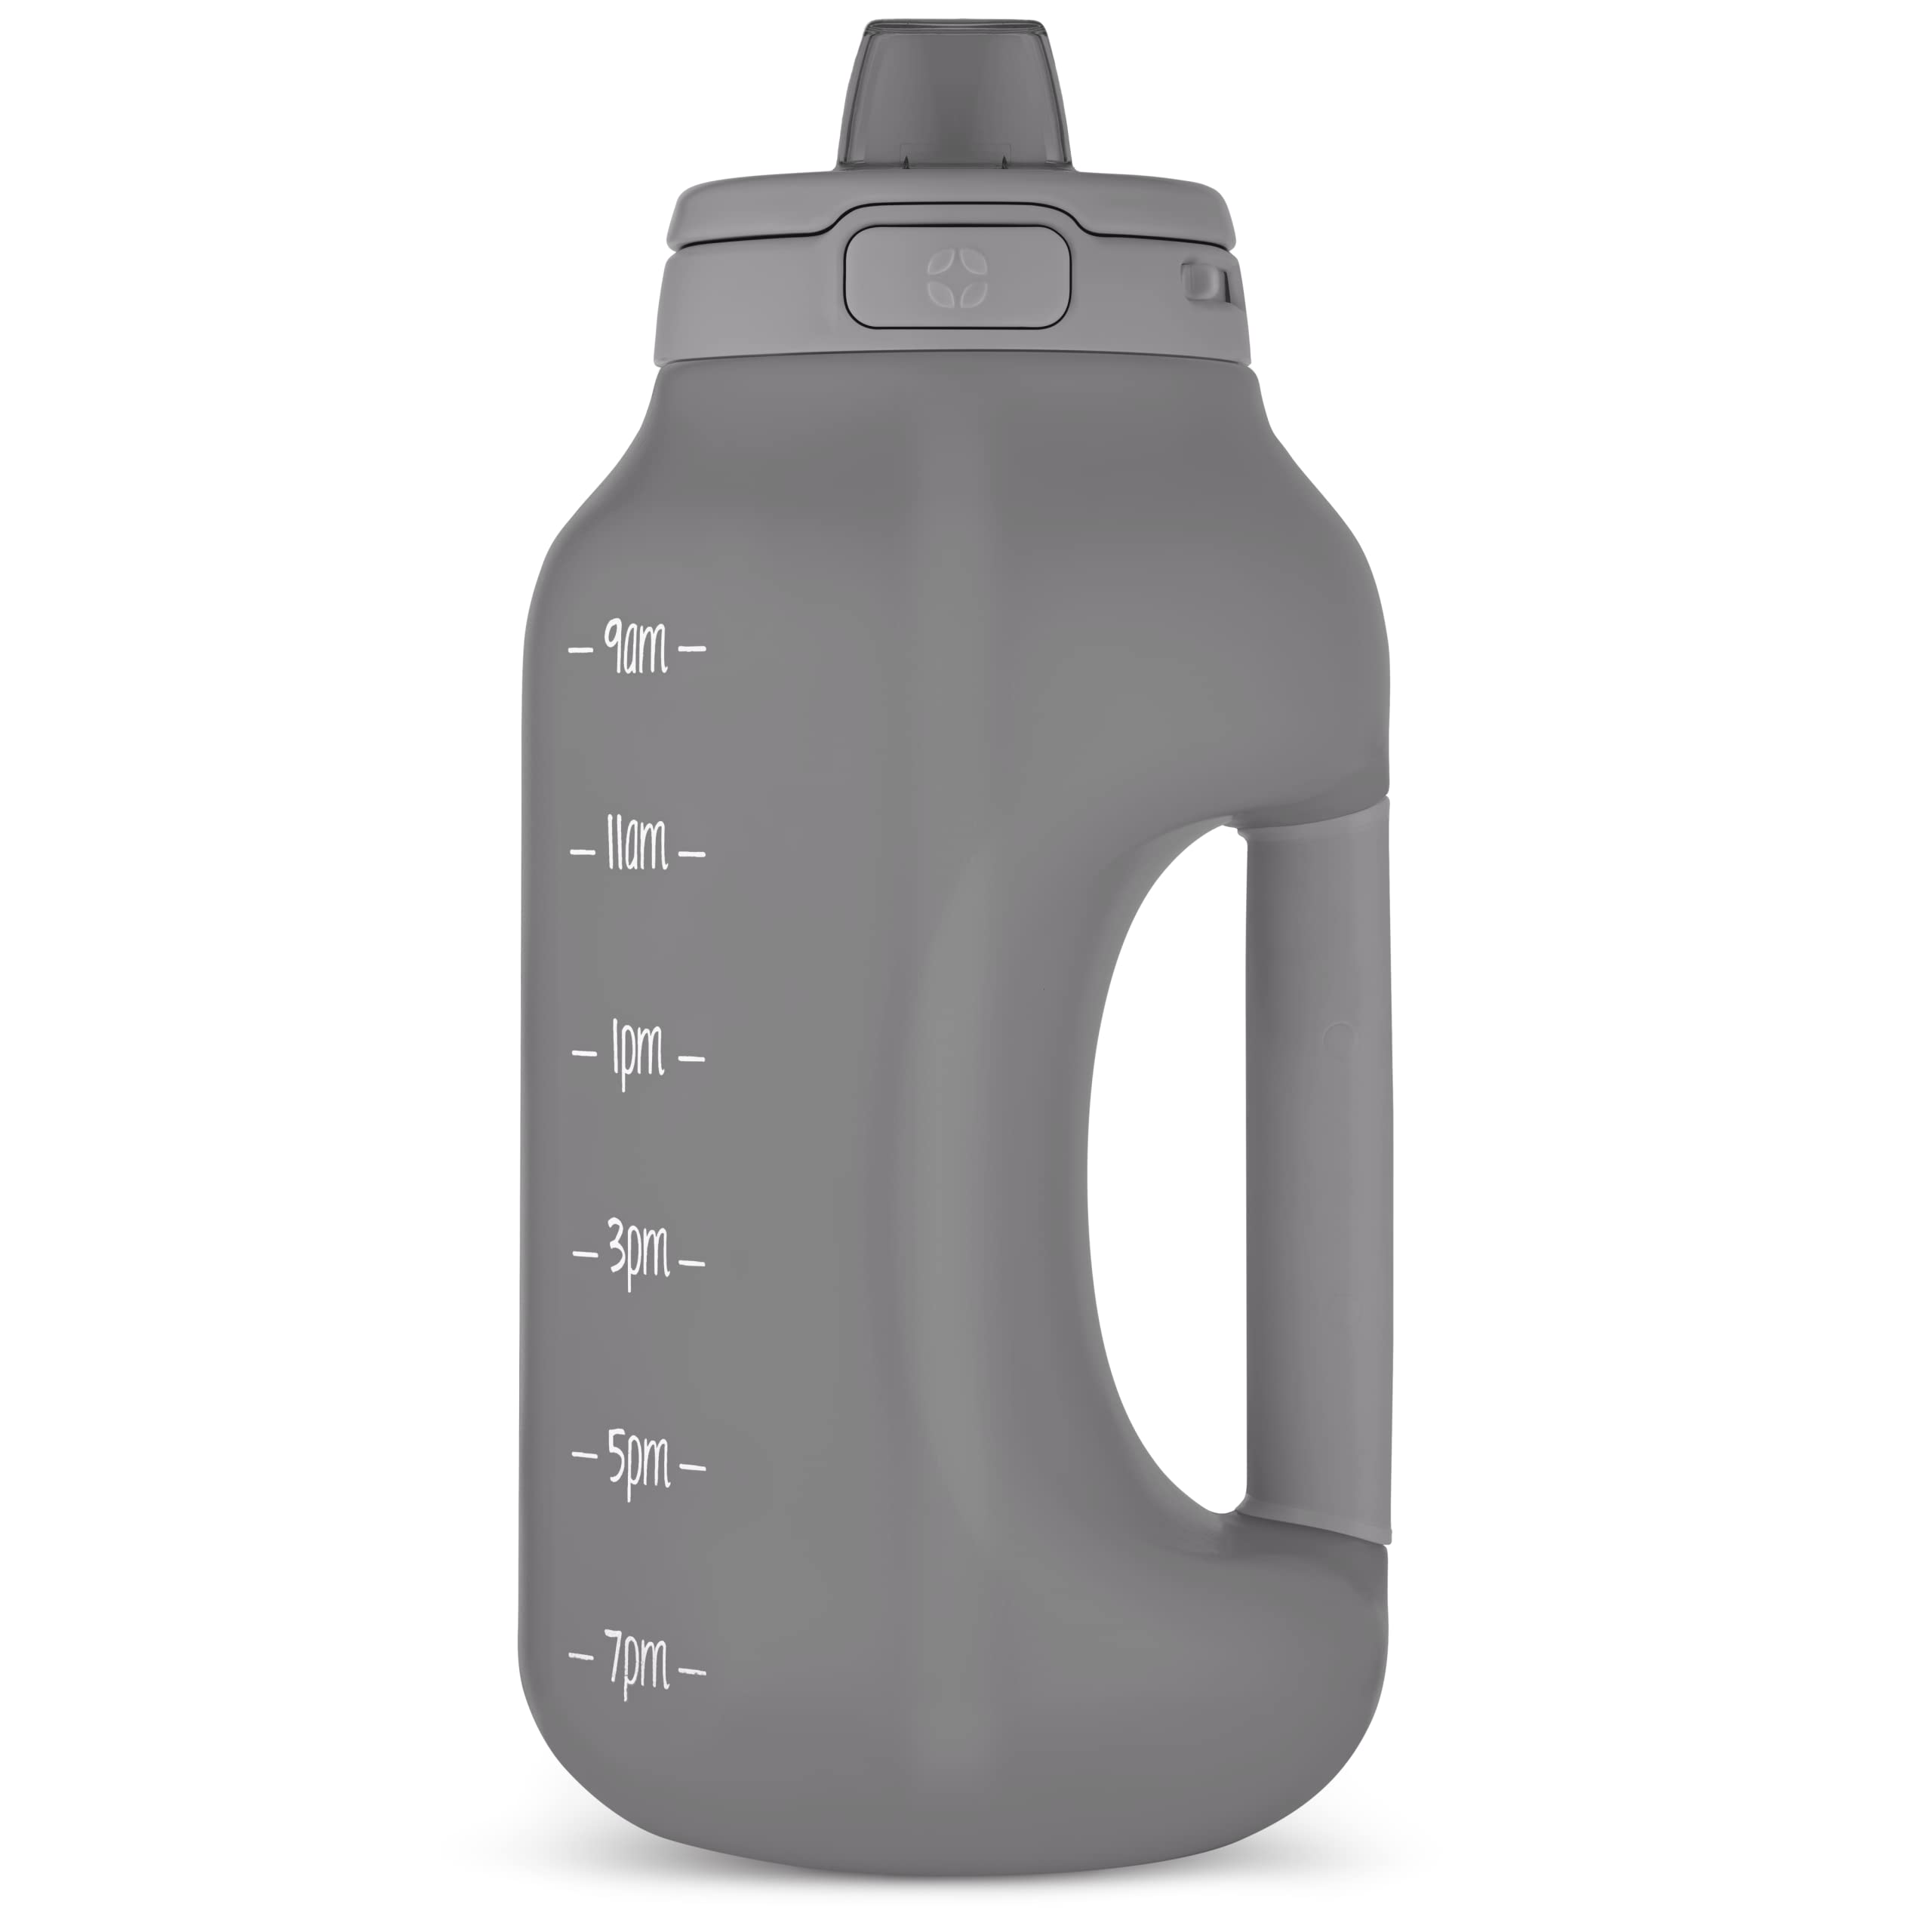 Ello Water Bottle Half Gallon Plastic Jugs - Grey